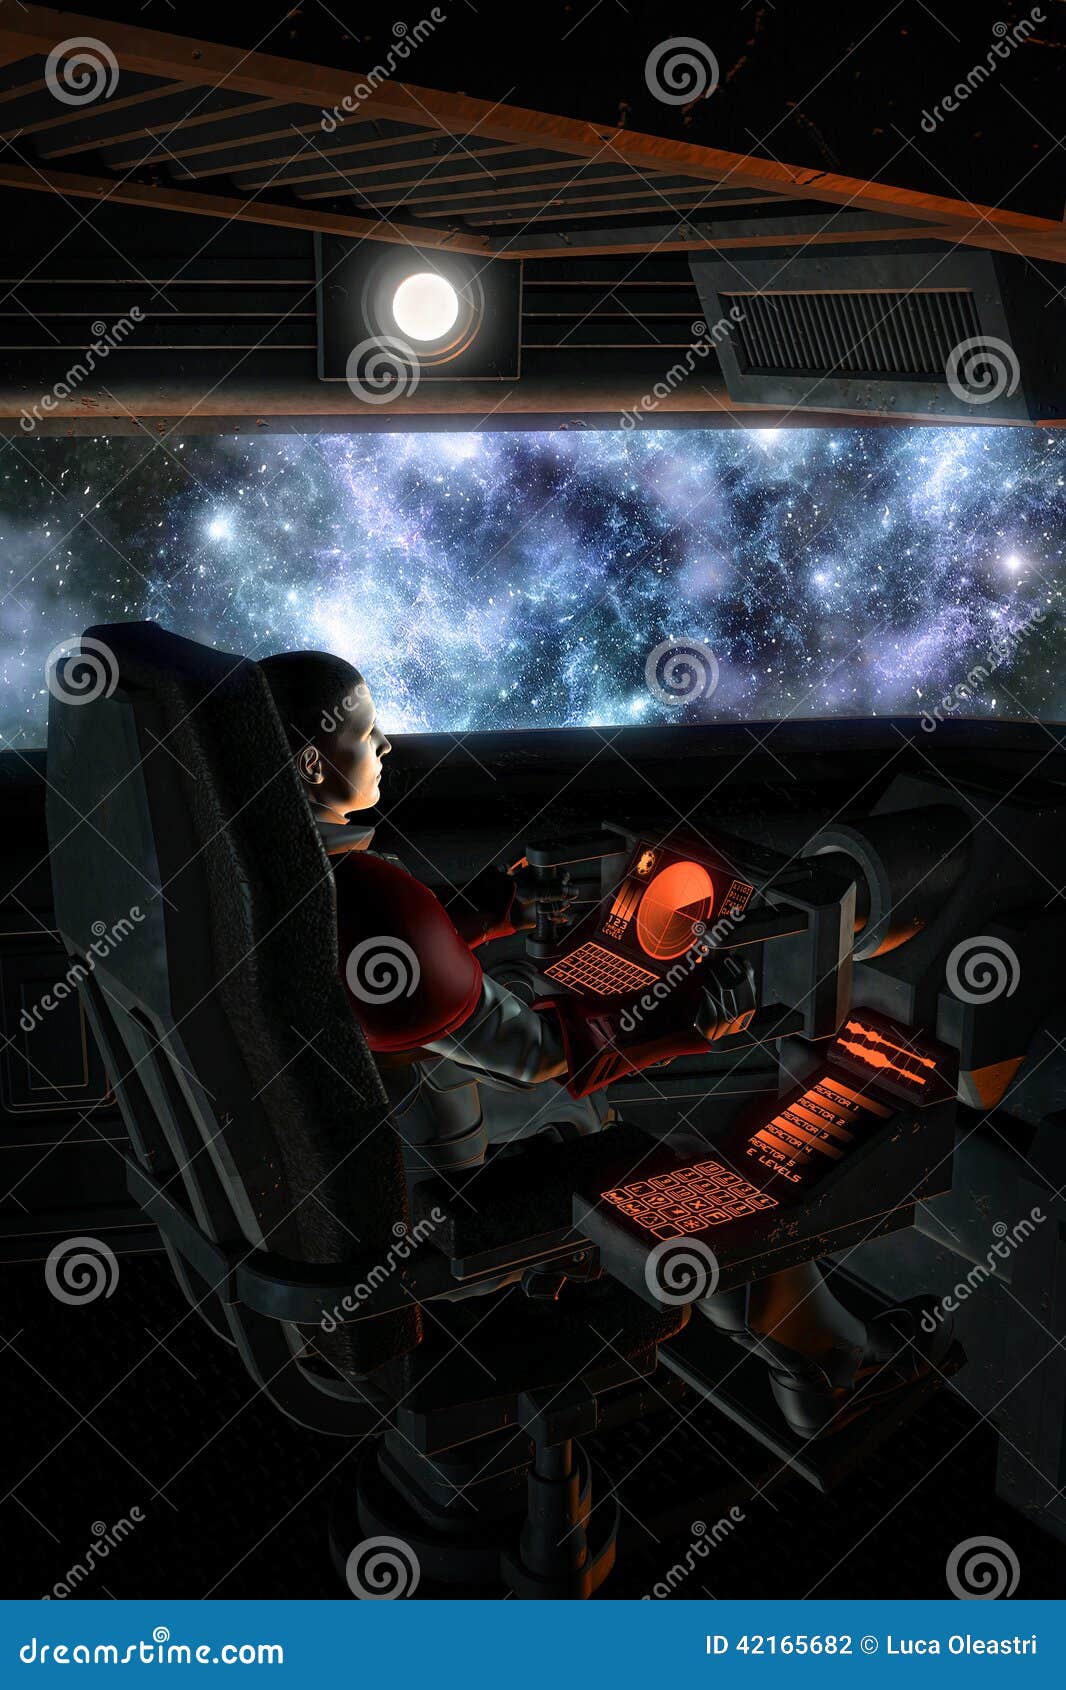 futuristic astronaut pilot and starfield nebula